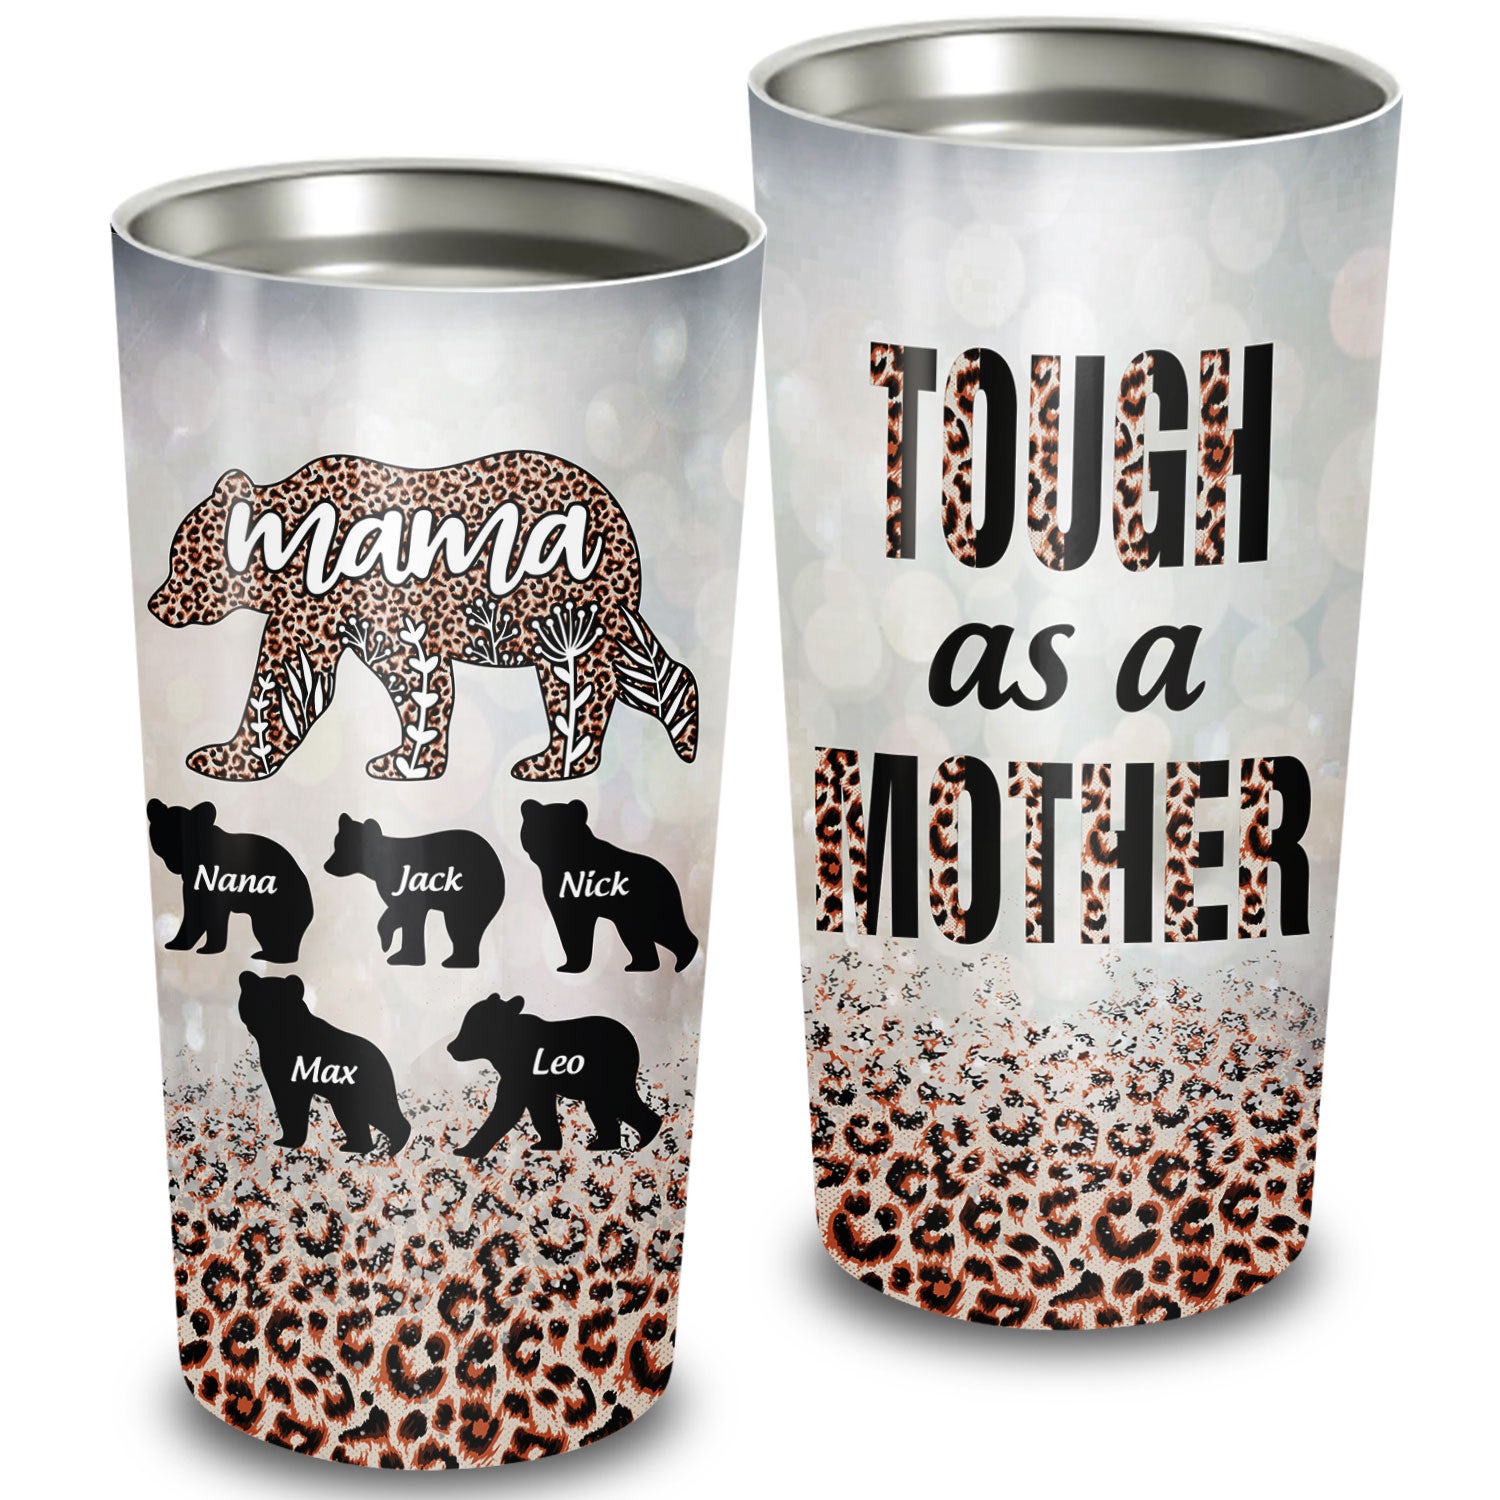 Southern - Mama Bear - 20 oz. mug